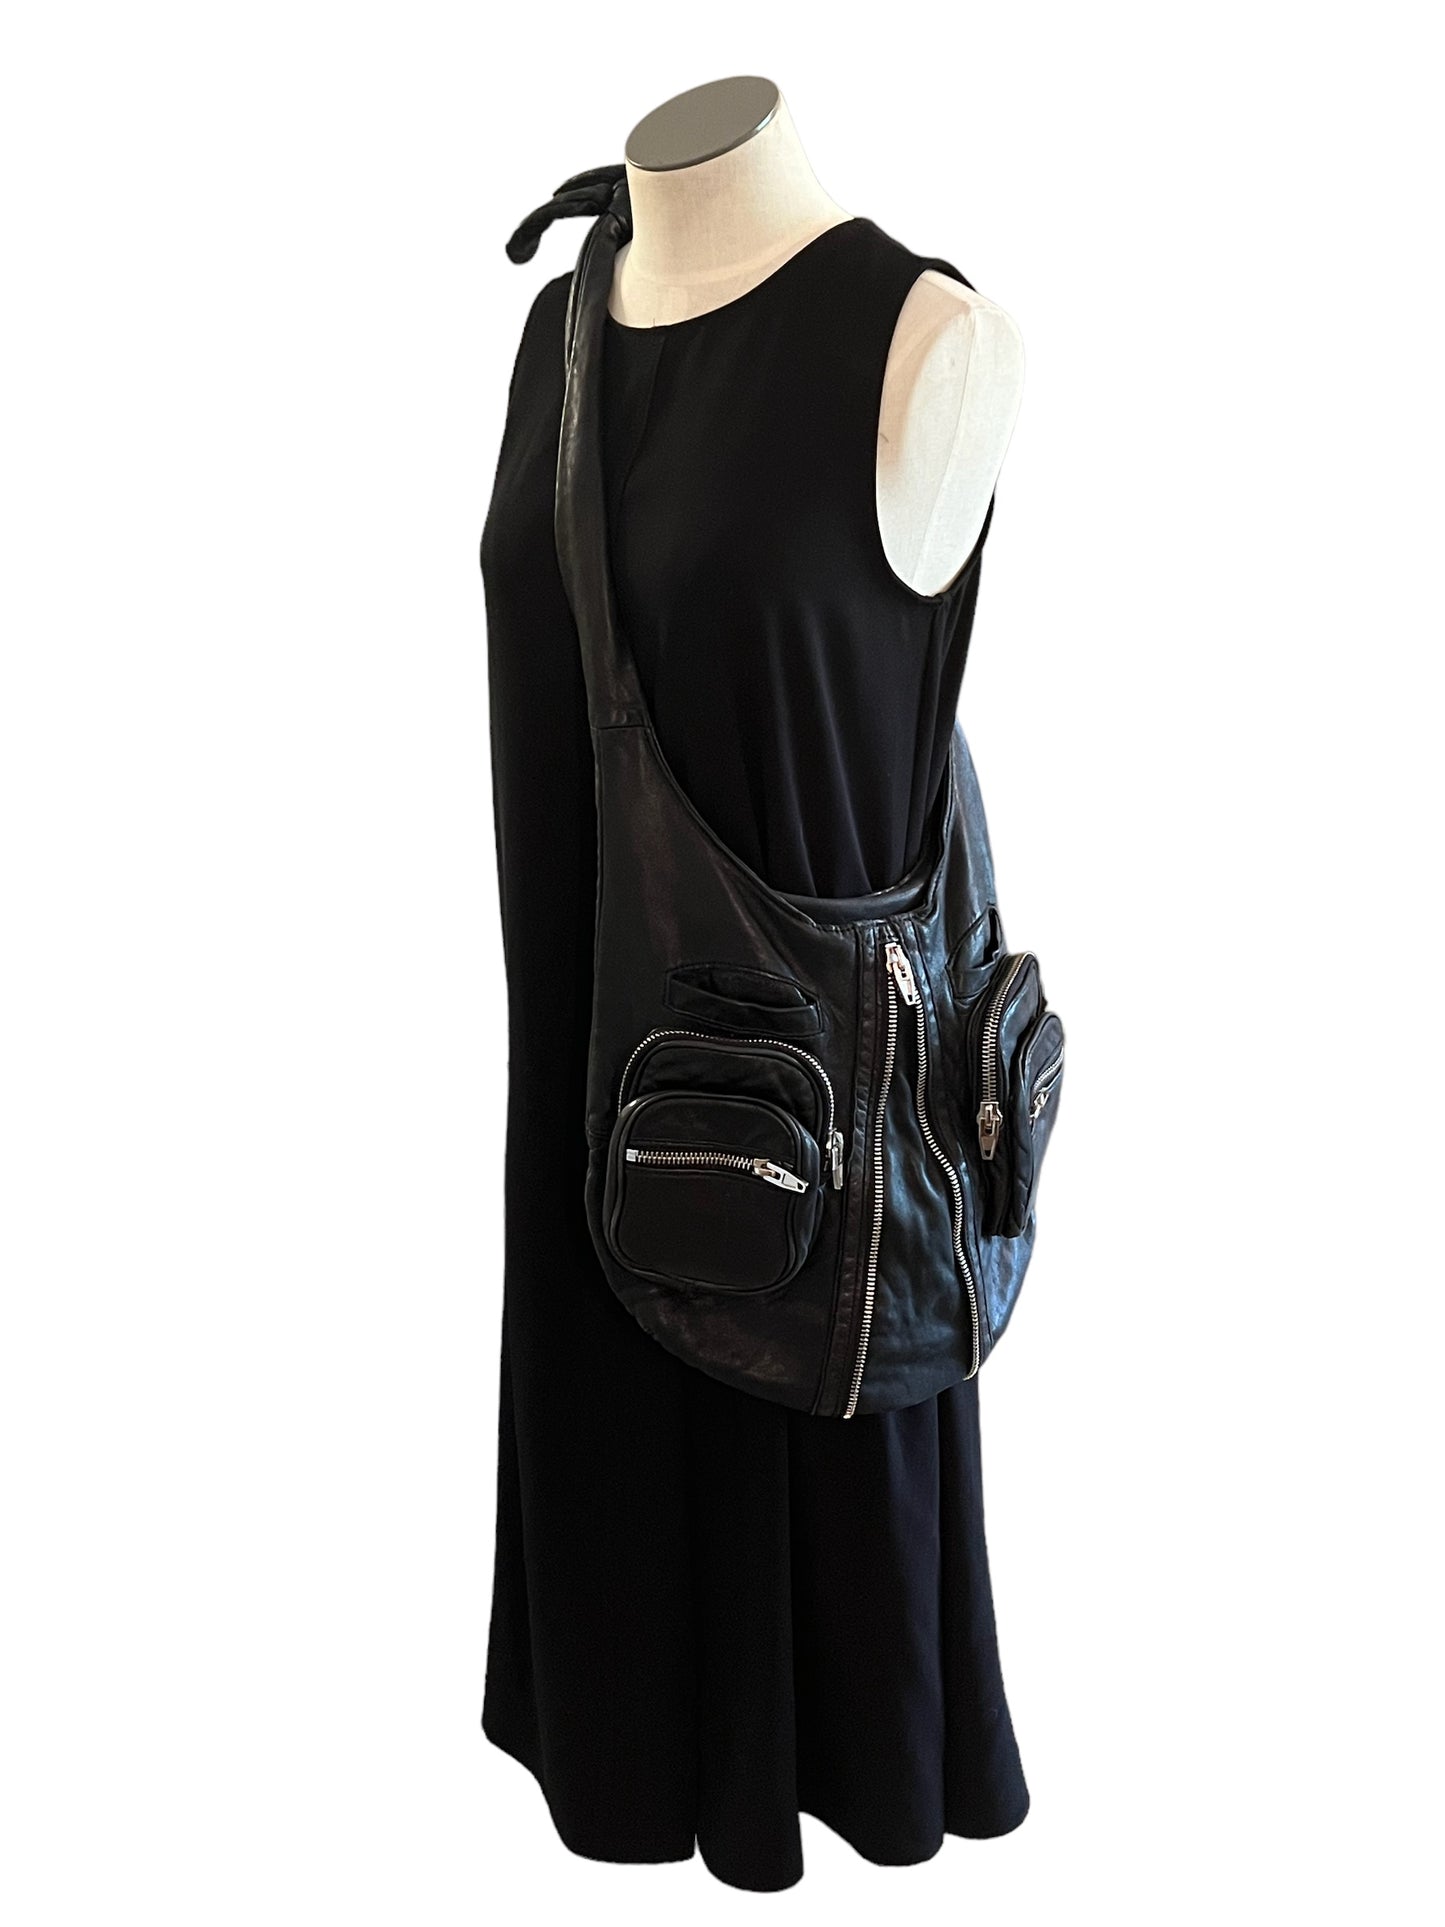 Alexander Wang Black Lambskin Donna Zip Hobo Shoulder Bag Crossbody